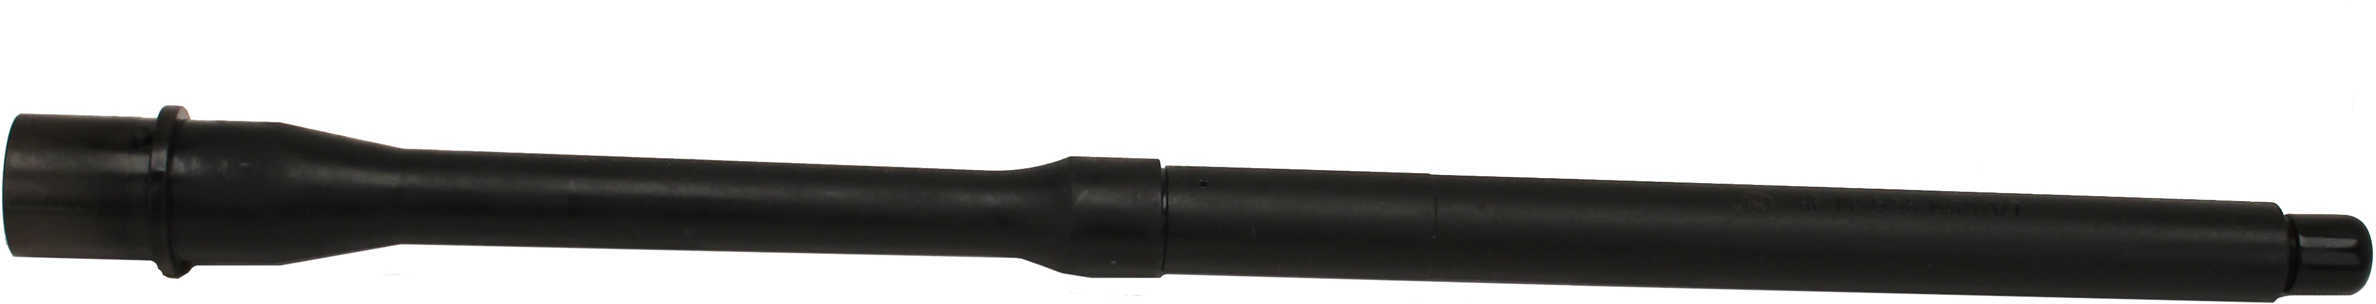 FN America Barrel 16" Hammer Forged For AR Rifles Carbine Length Gas System Black 36421